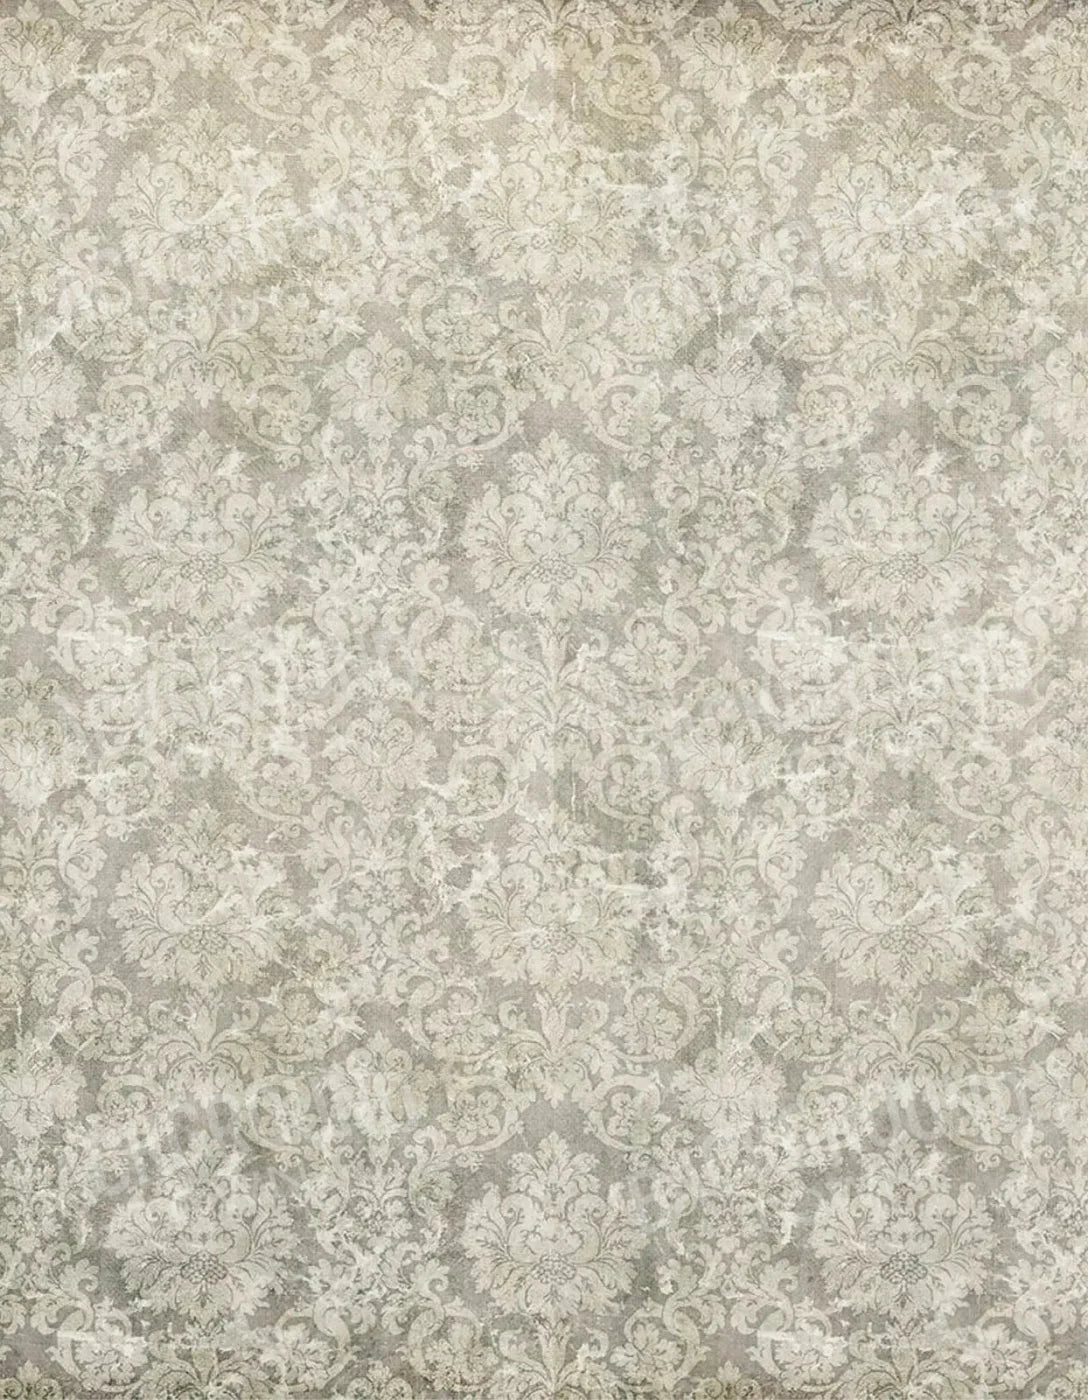 Damask Lace 6X8 Fleece ( 72 X 96 Inch ) Backdrop